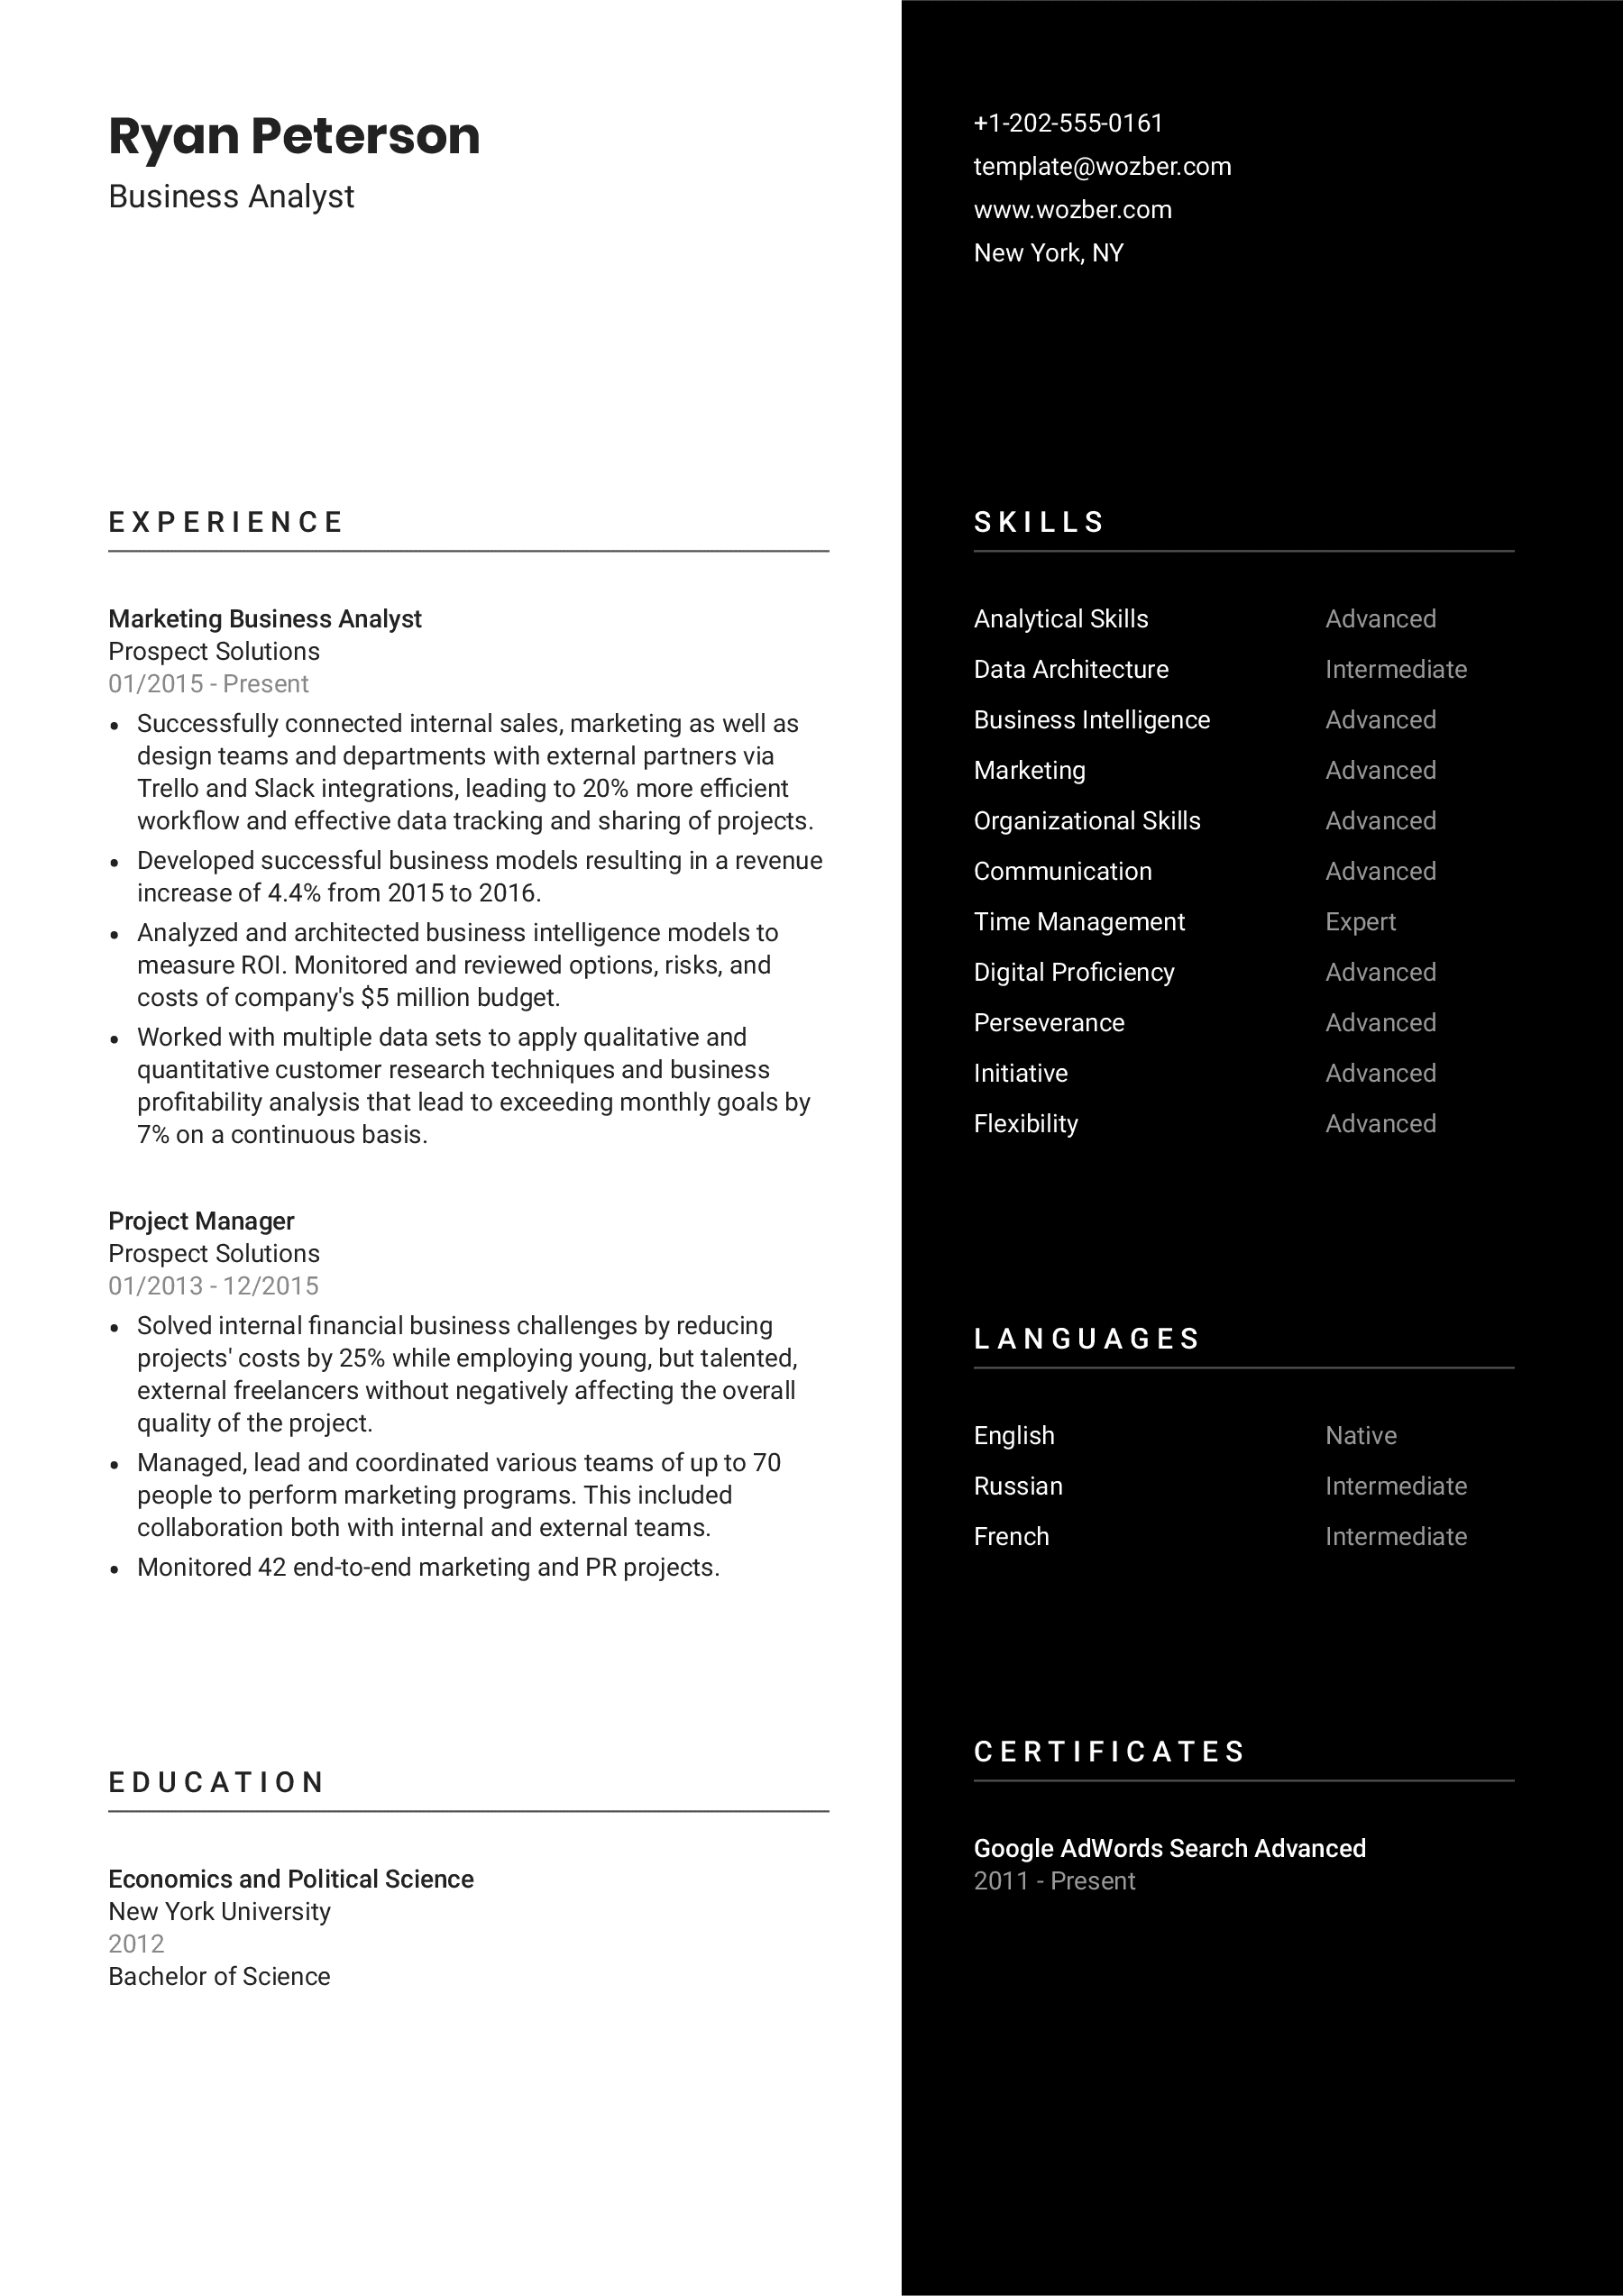 A black and white creative CV template for those who seek a classic feel.